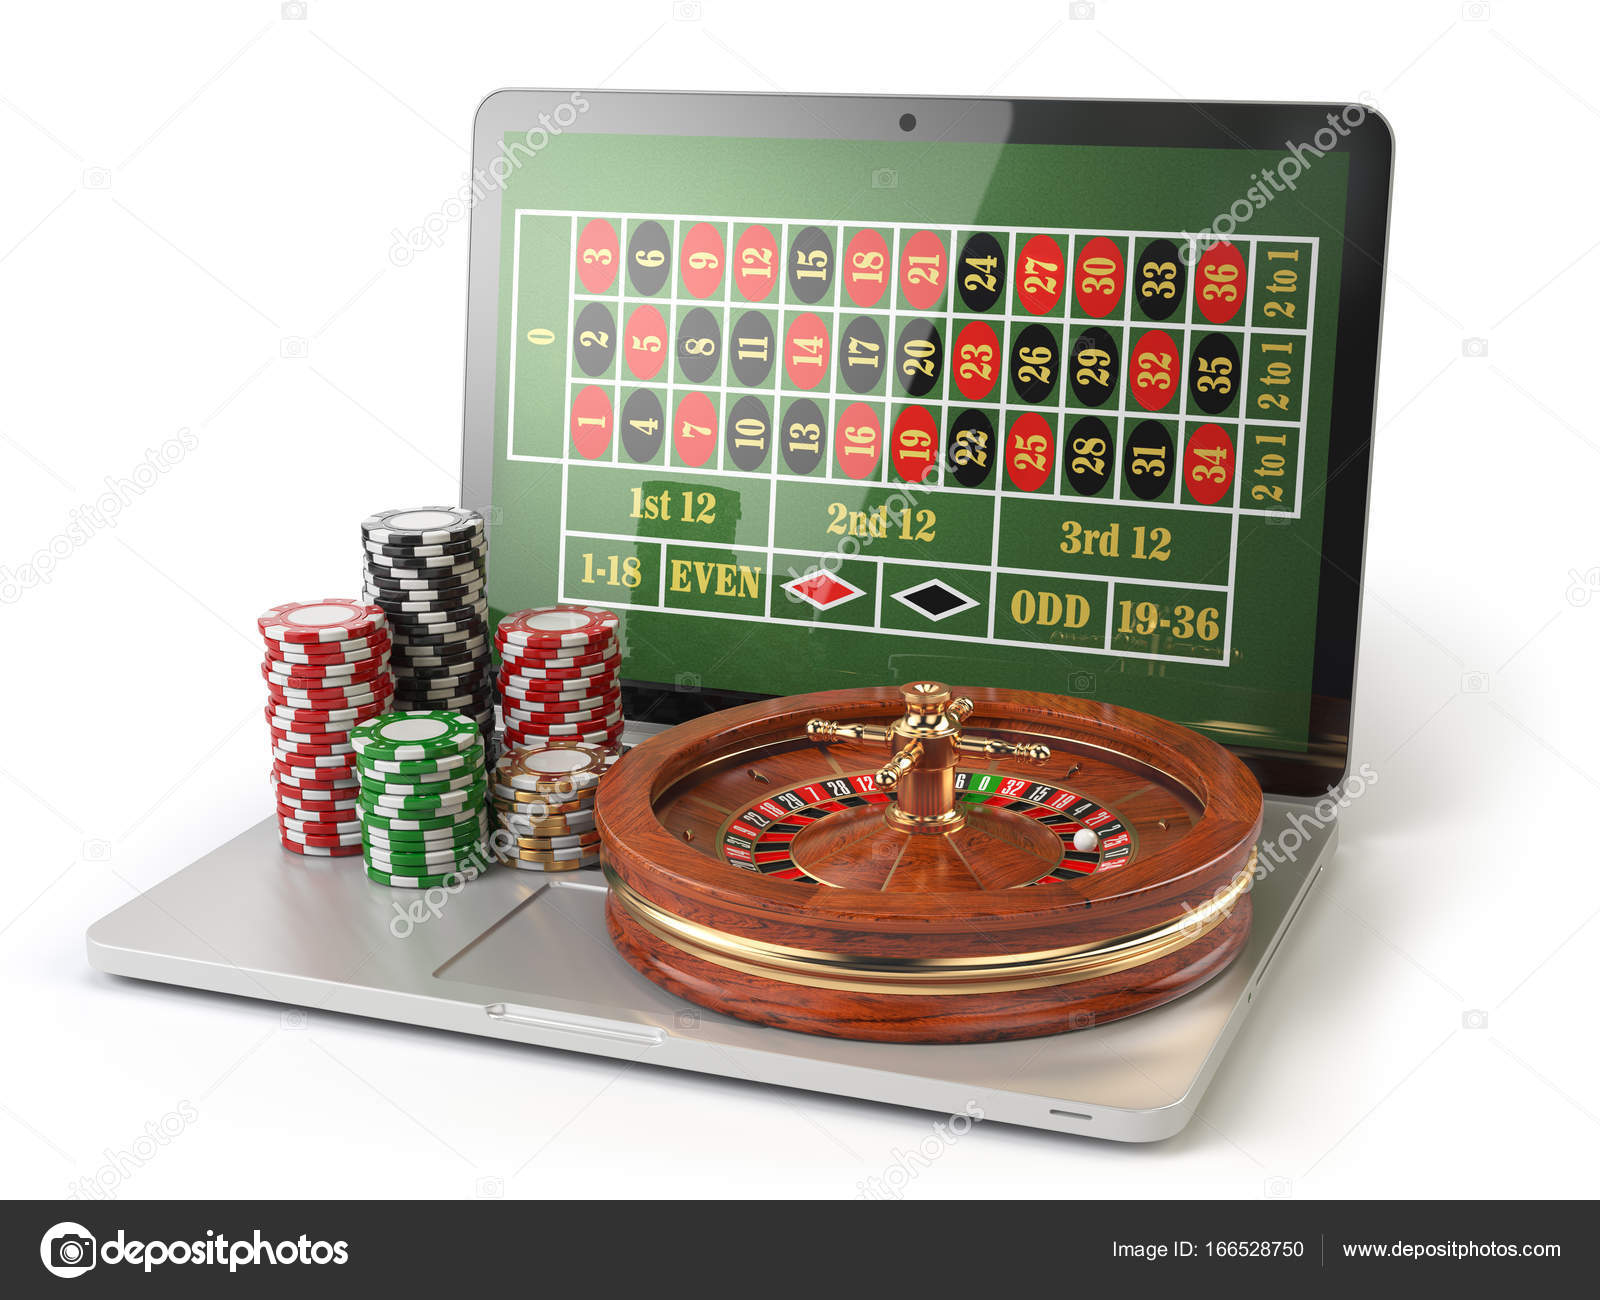 Tdu2 how to win r8 casino